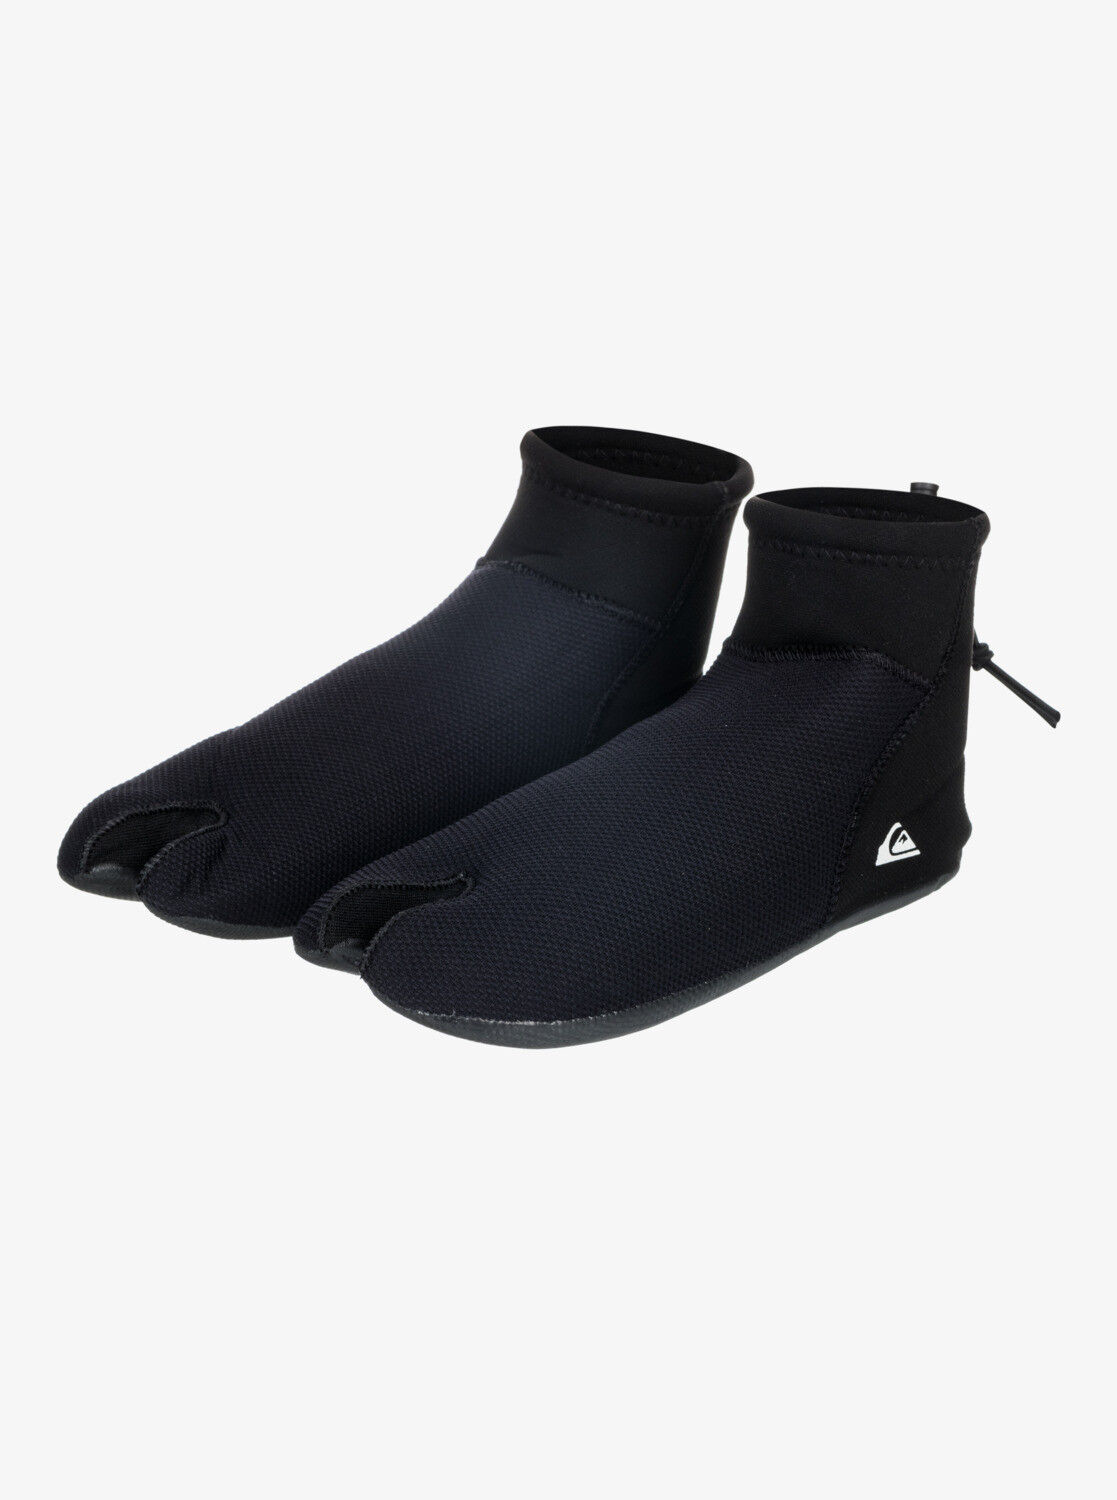 Quiksilver 3mm Highline - Neoprene shoes | Hardloop